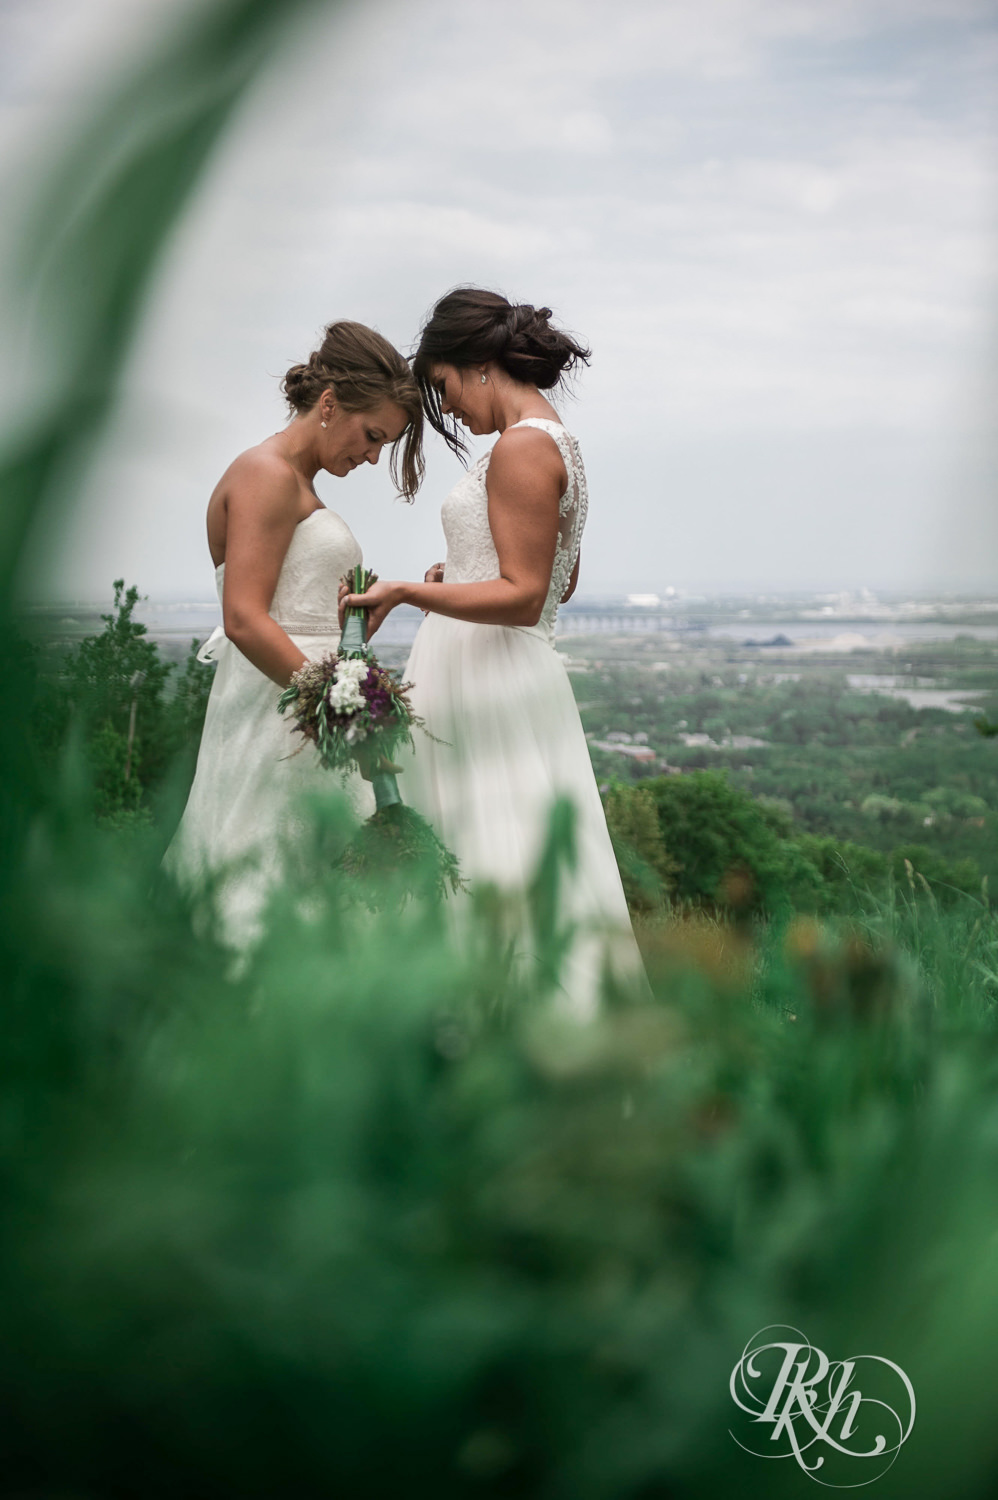 Lesbian brides kiss outside at Spirit Mountain in Duluth, Minnesota.